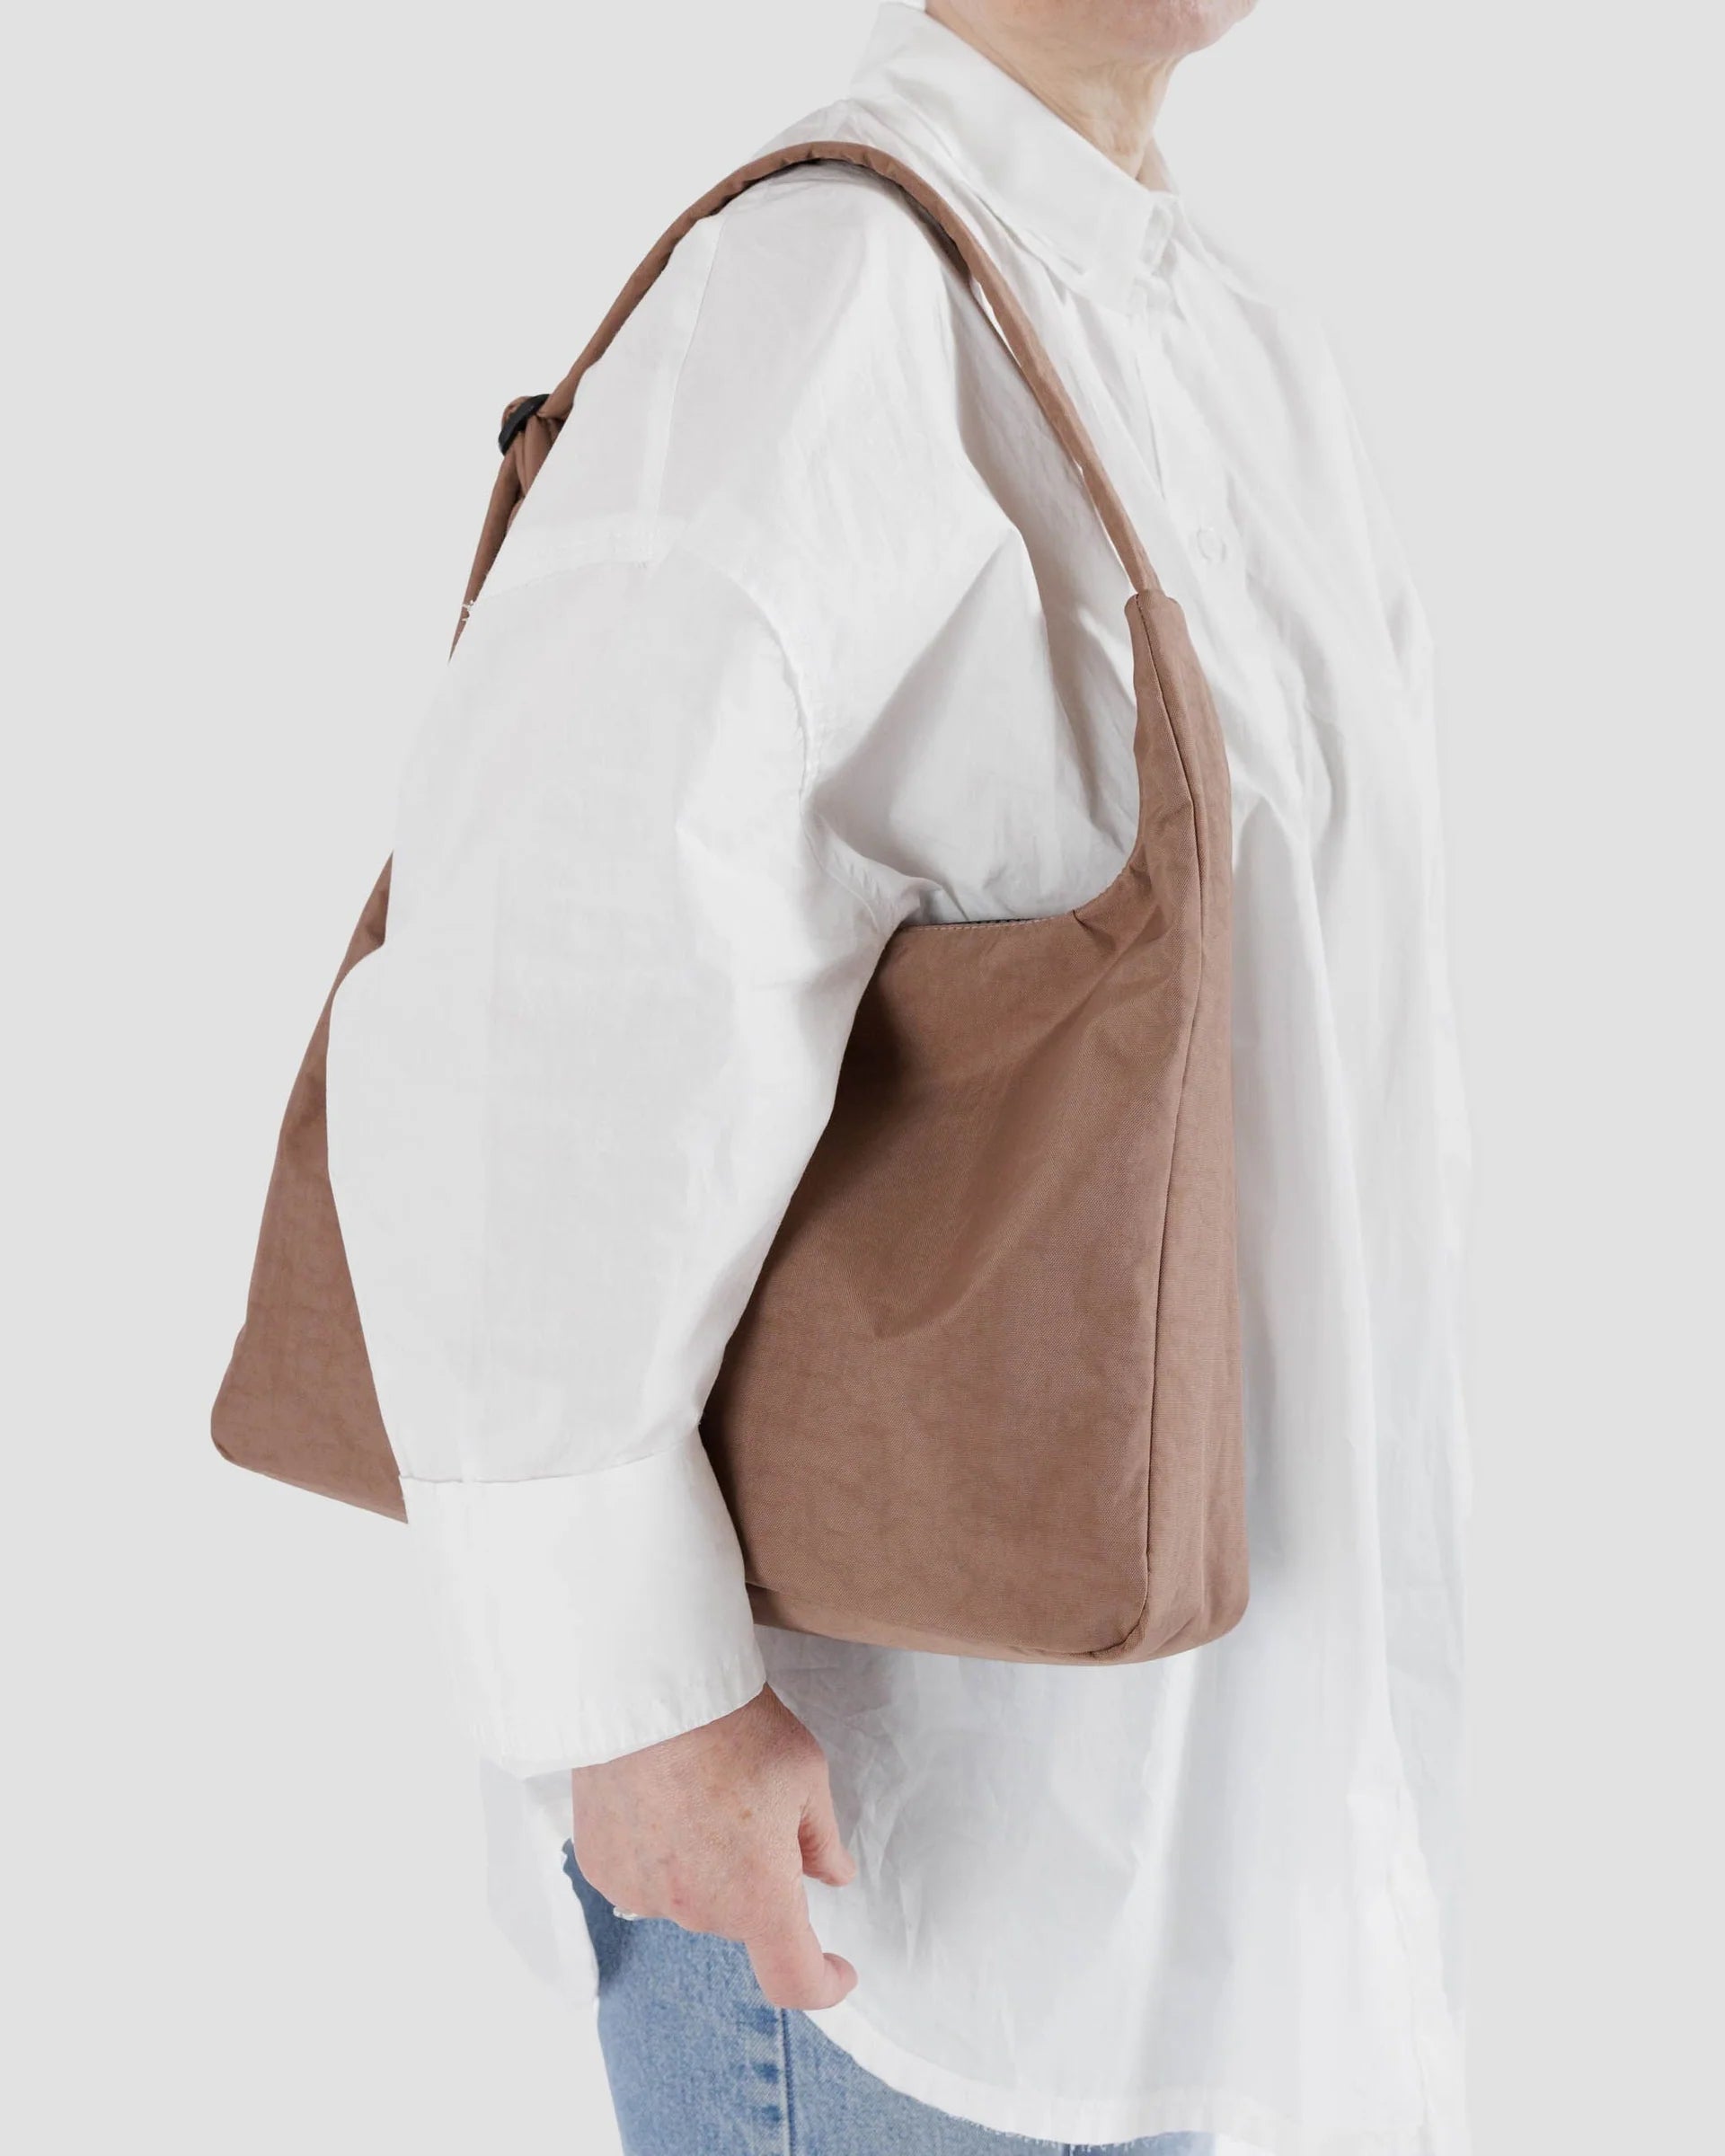 Nylon Shoulder Bag | Cocoa - BAGGU - Beechworth Emporium